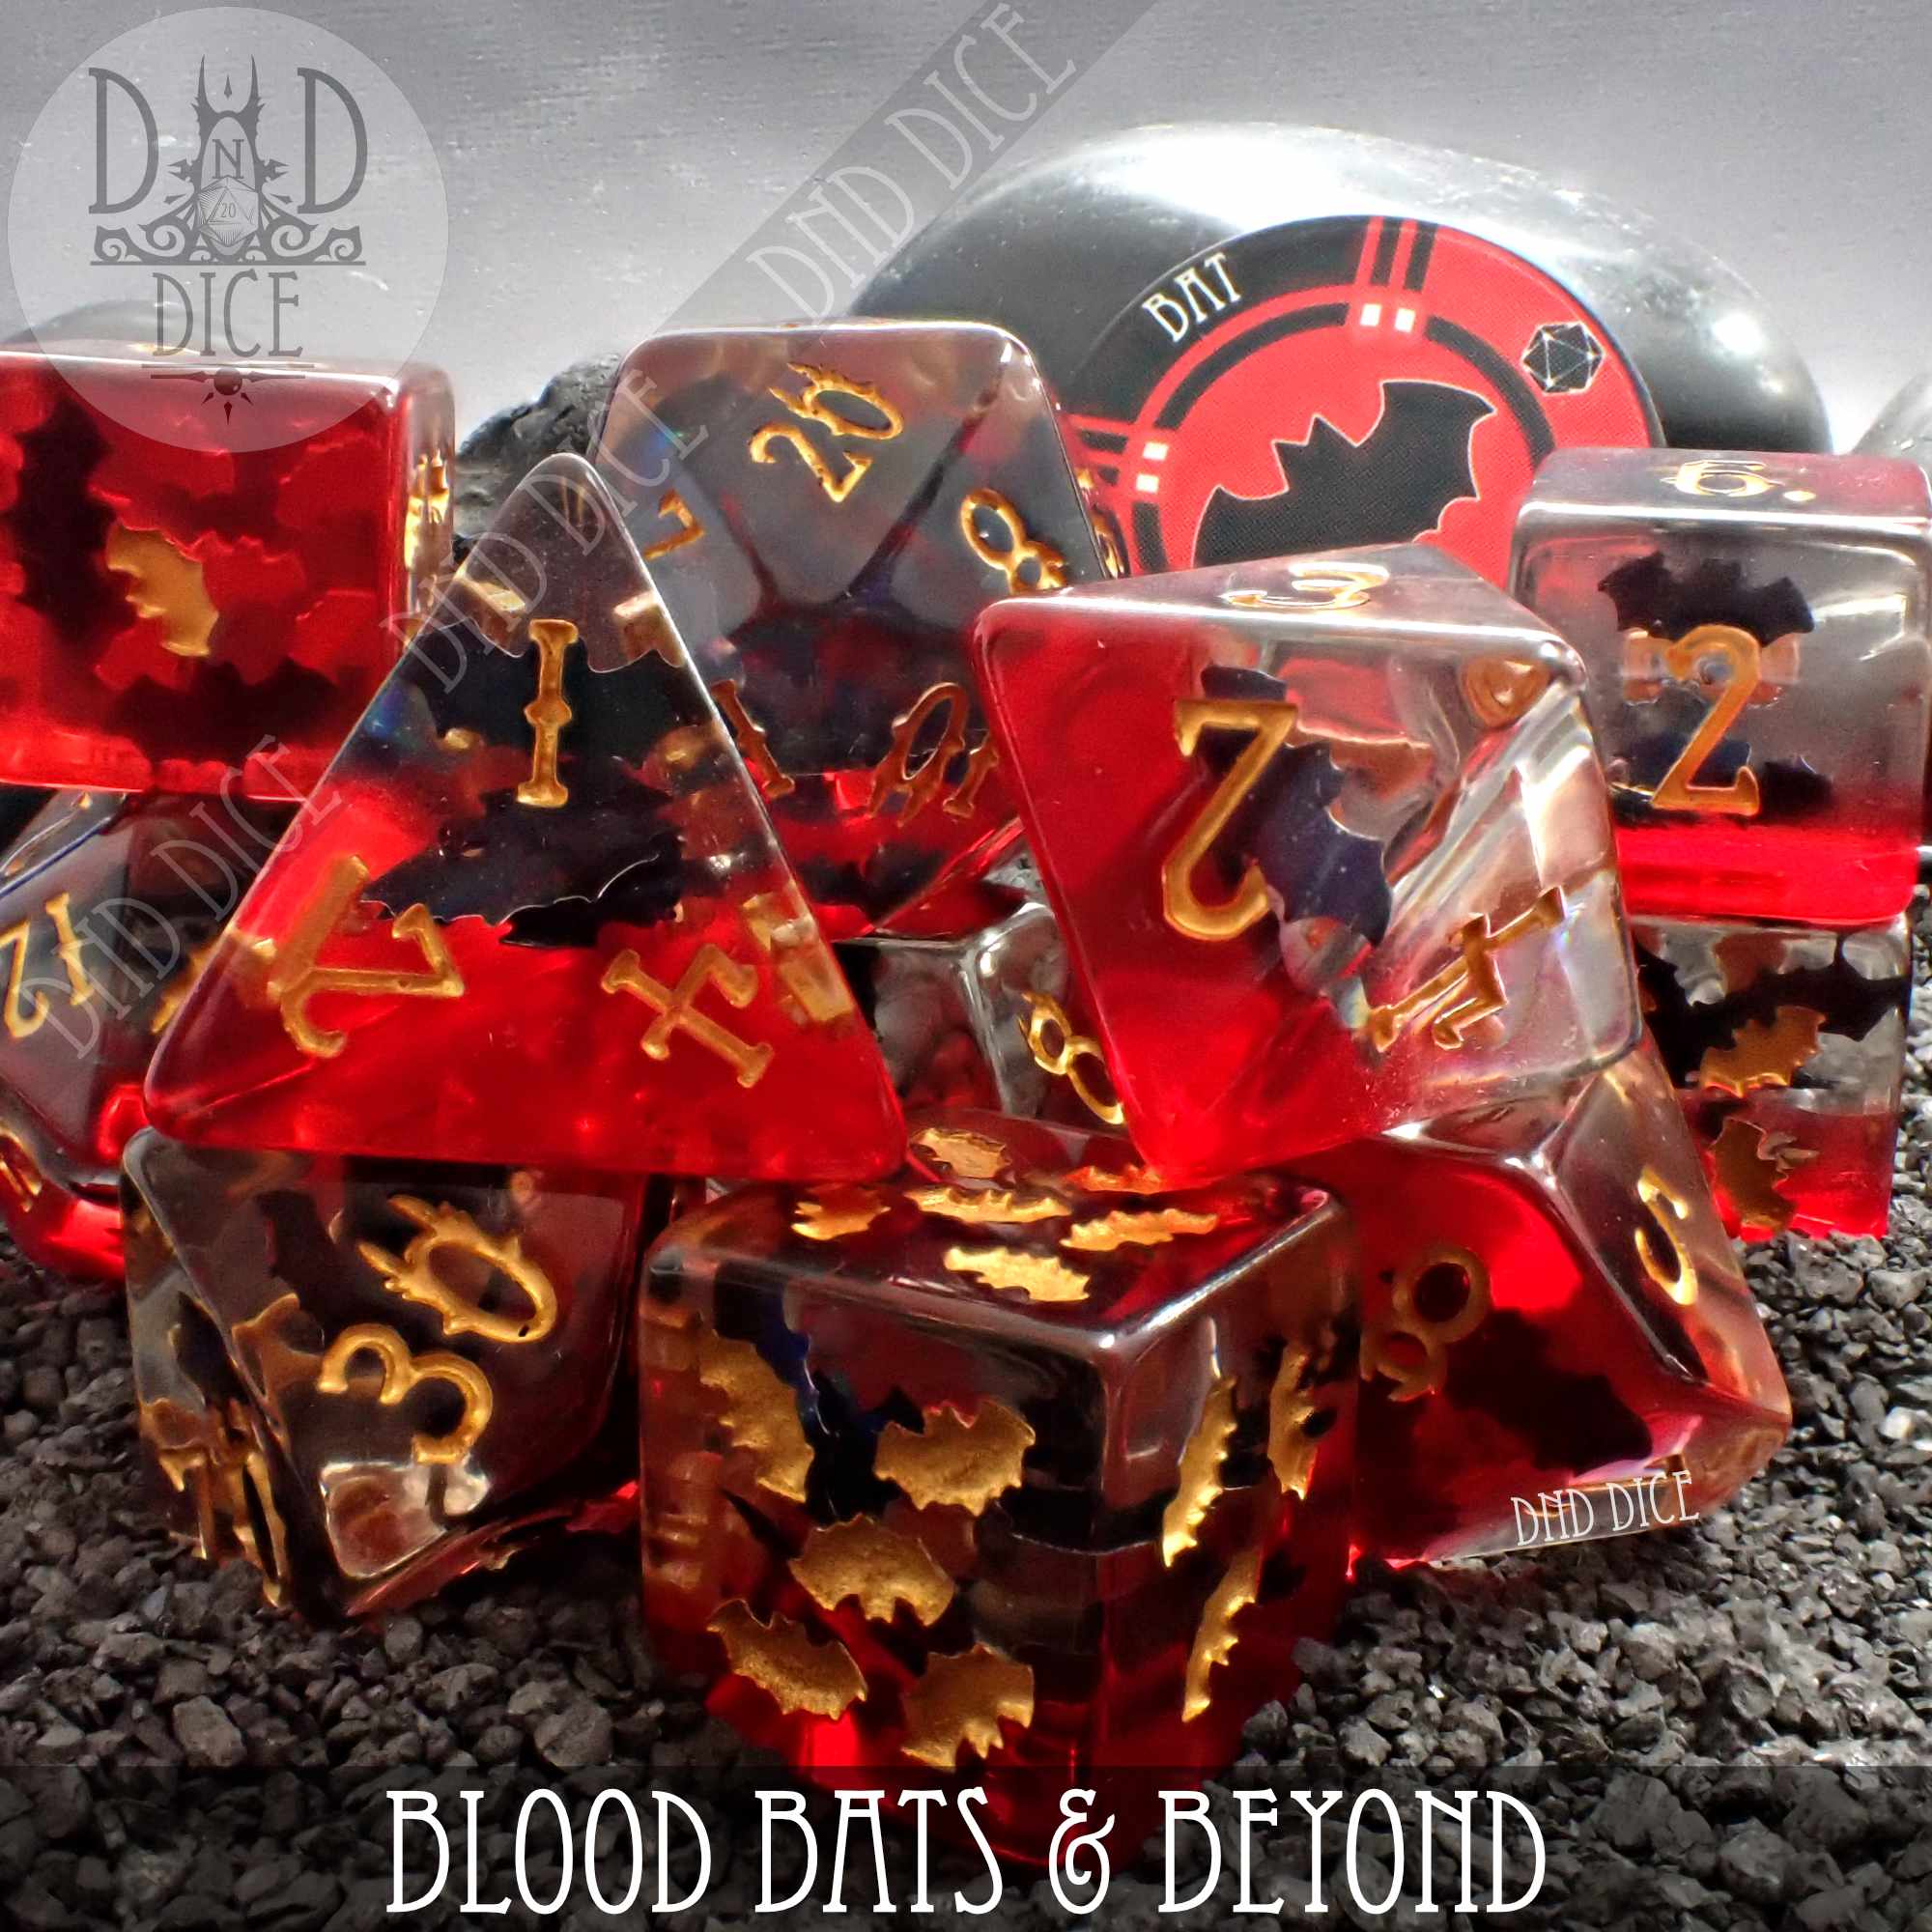 Blood Bats & Beyond - 11 Dice Set